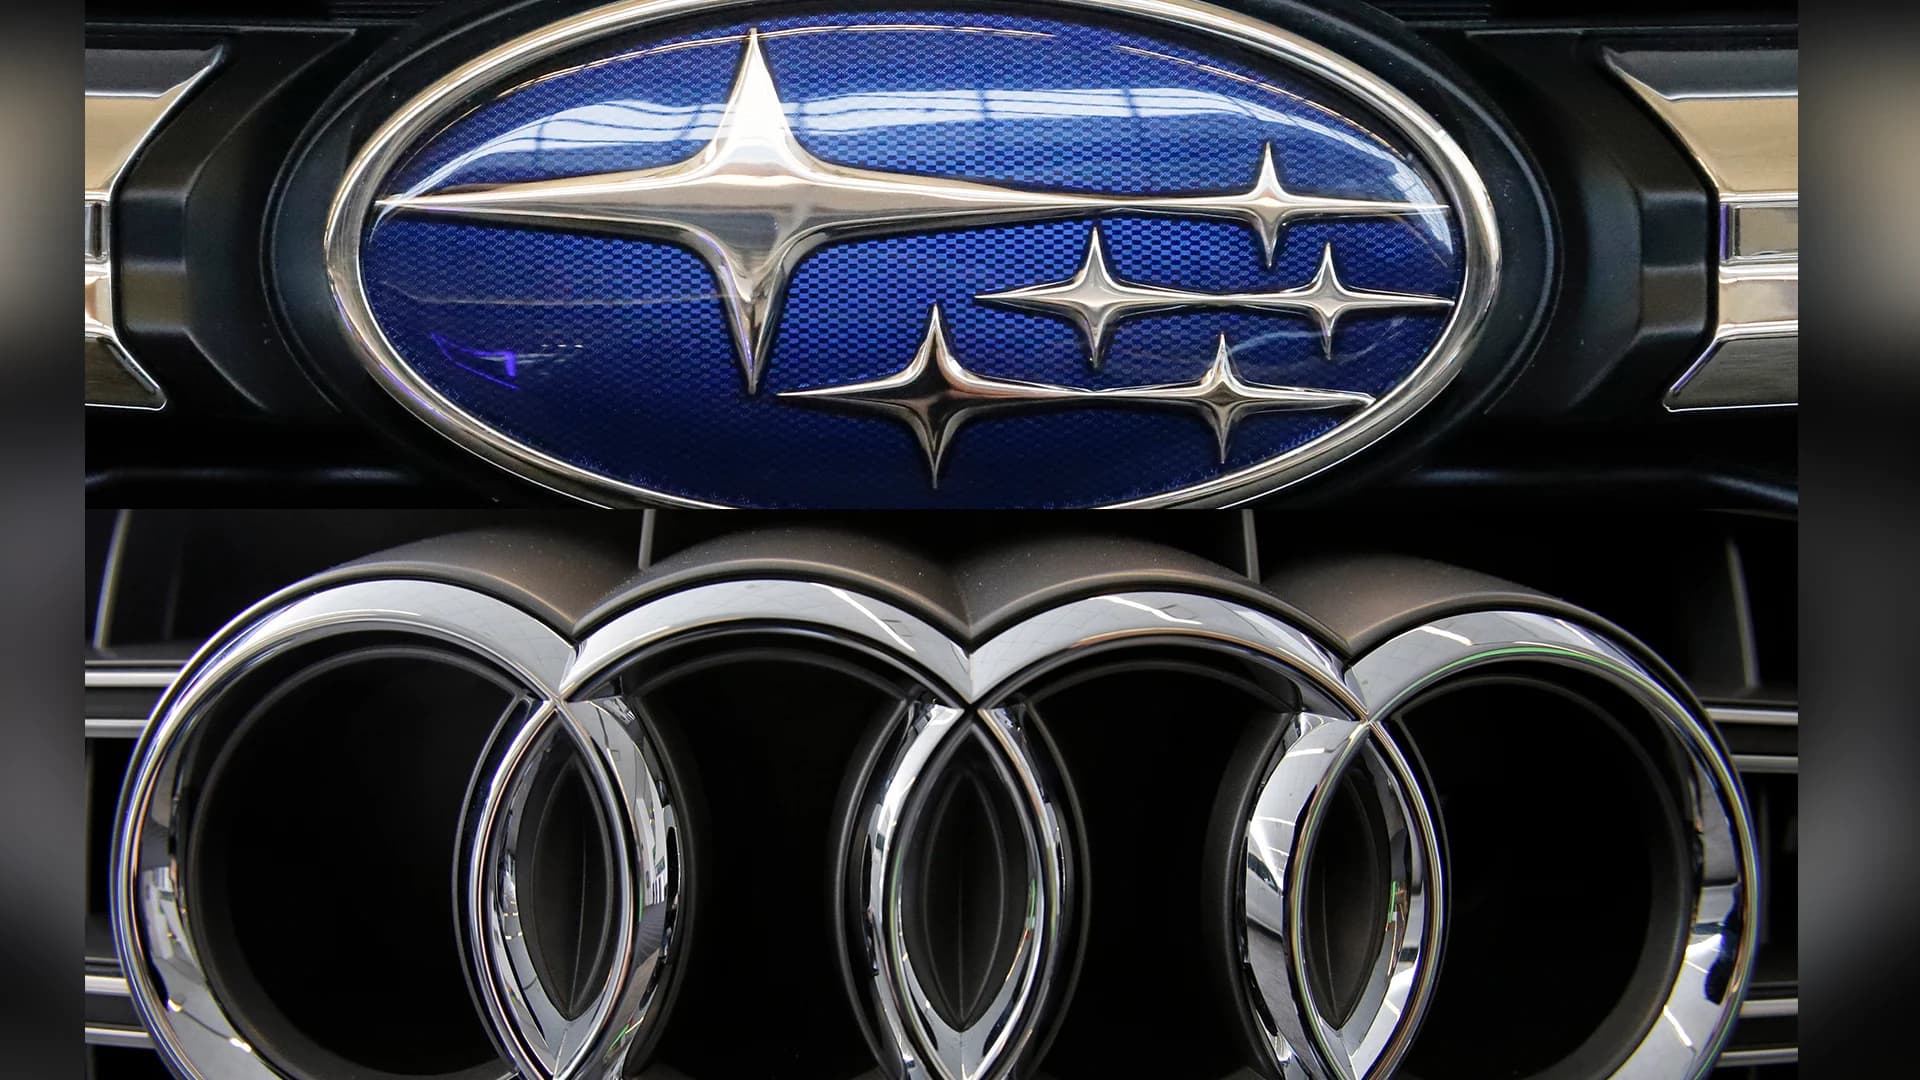 Audi, Subaru issue recalls; thousands of vehicles impacted